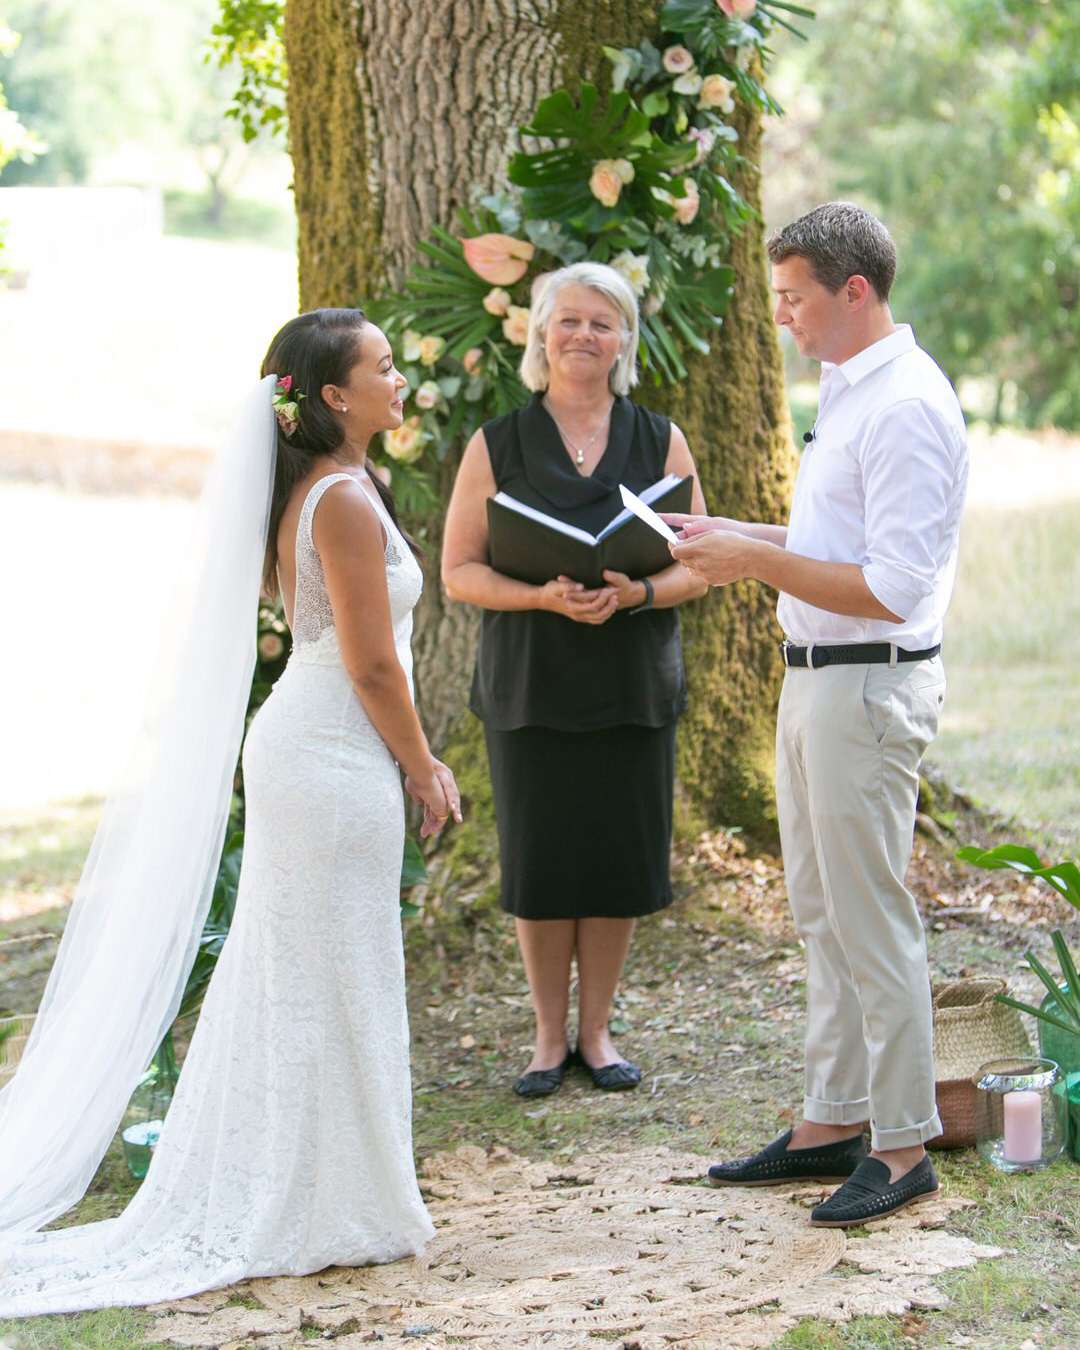 jen tim wedding ceremony in front of tree